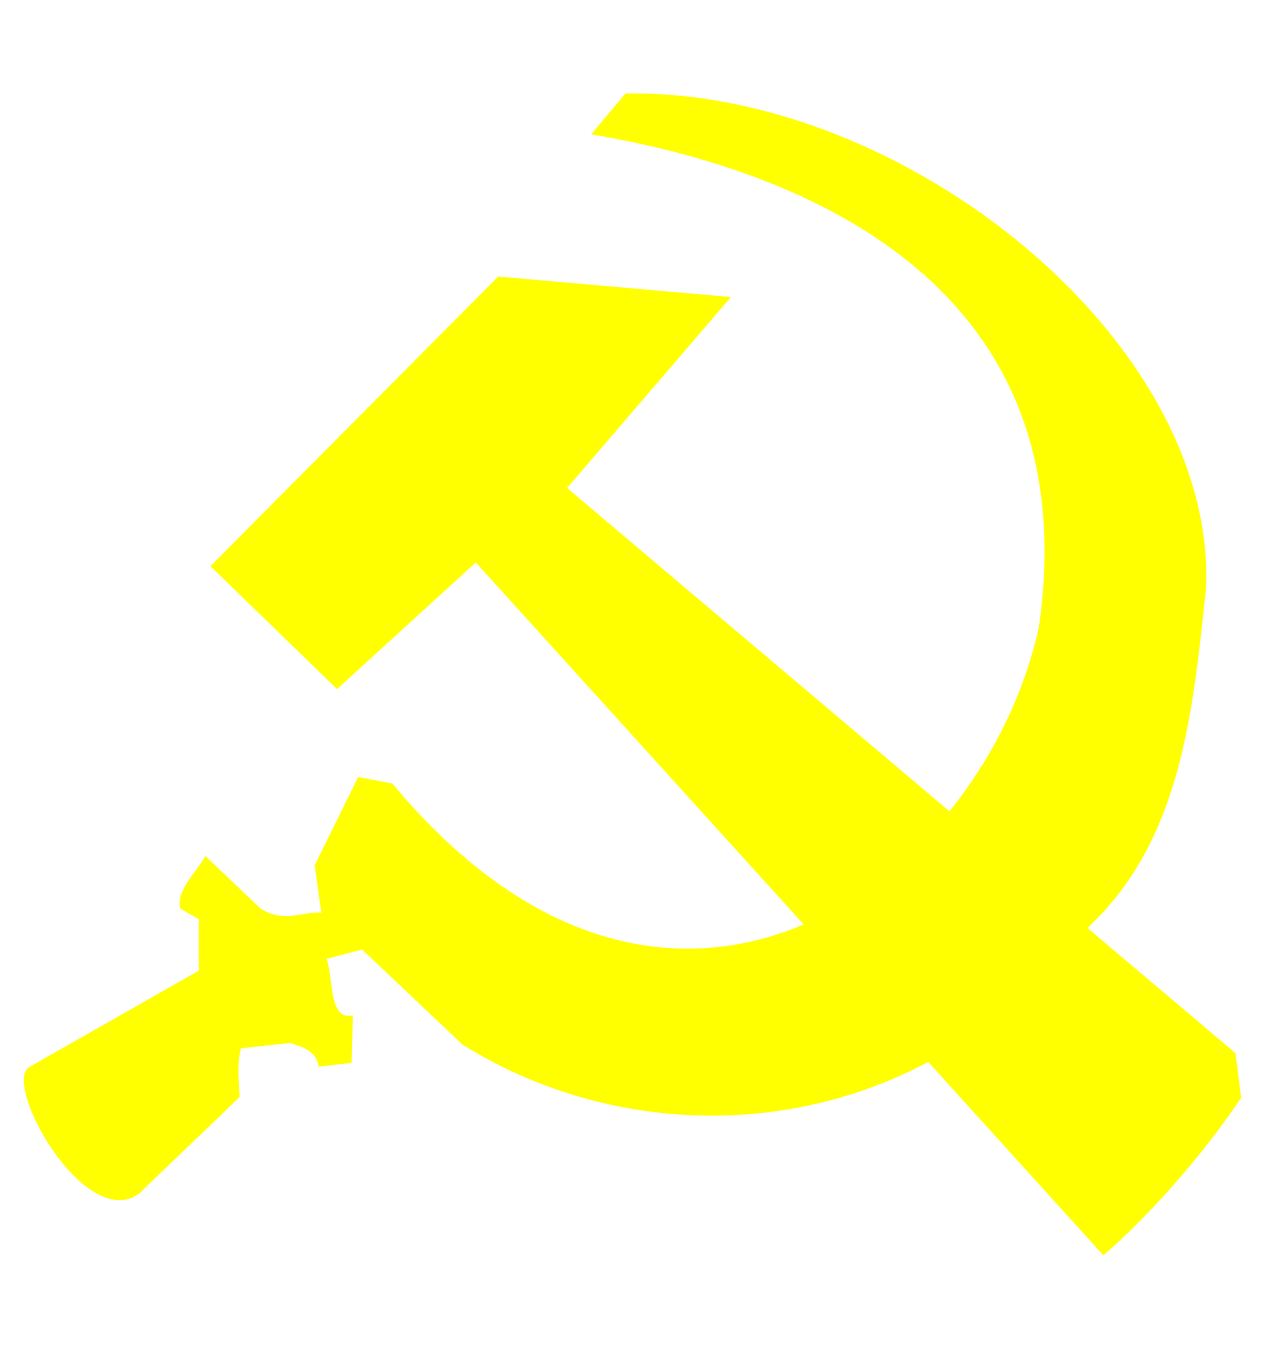 Communism Images - Free Download on Freepik